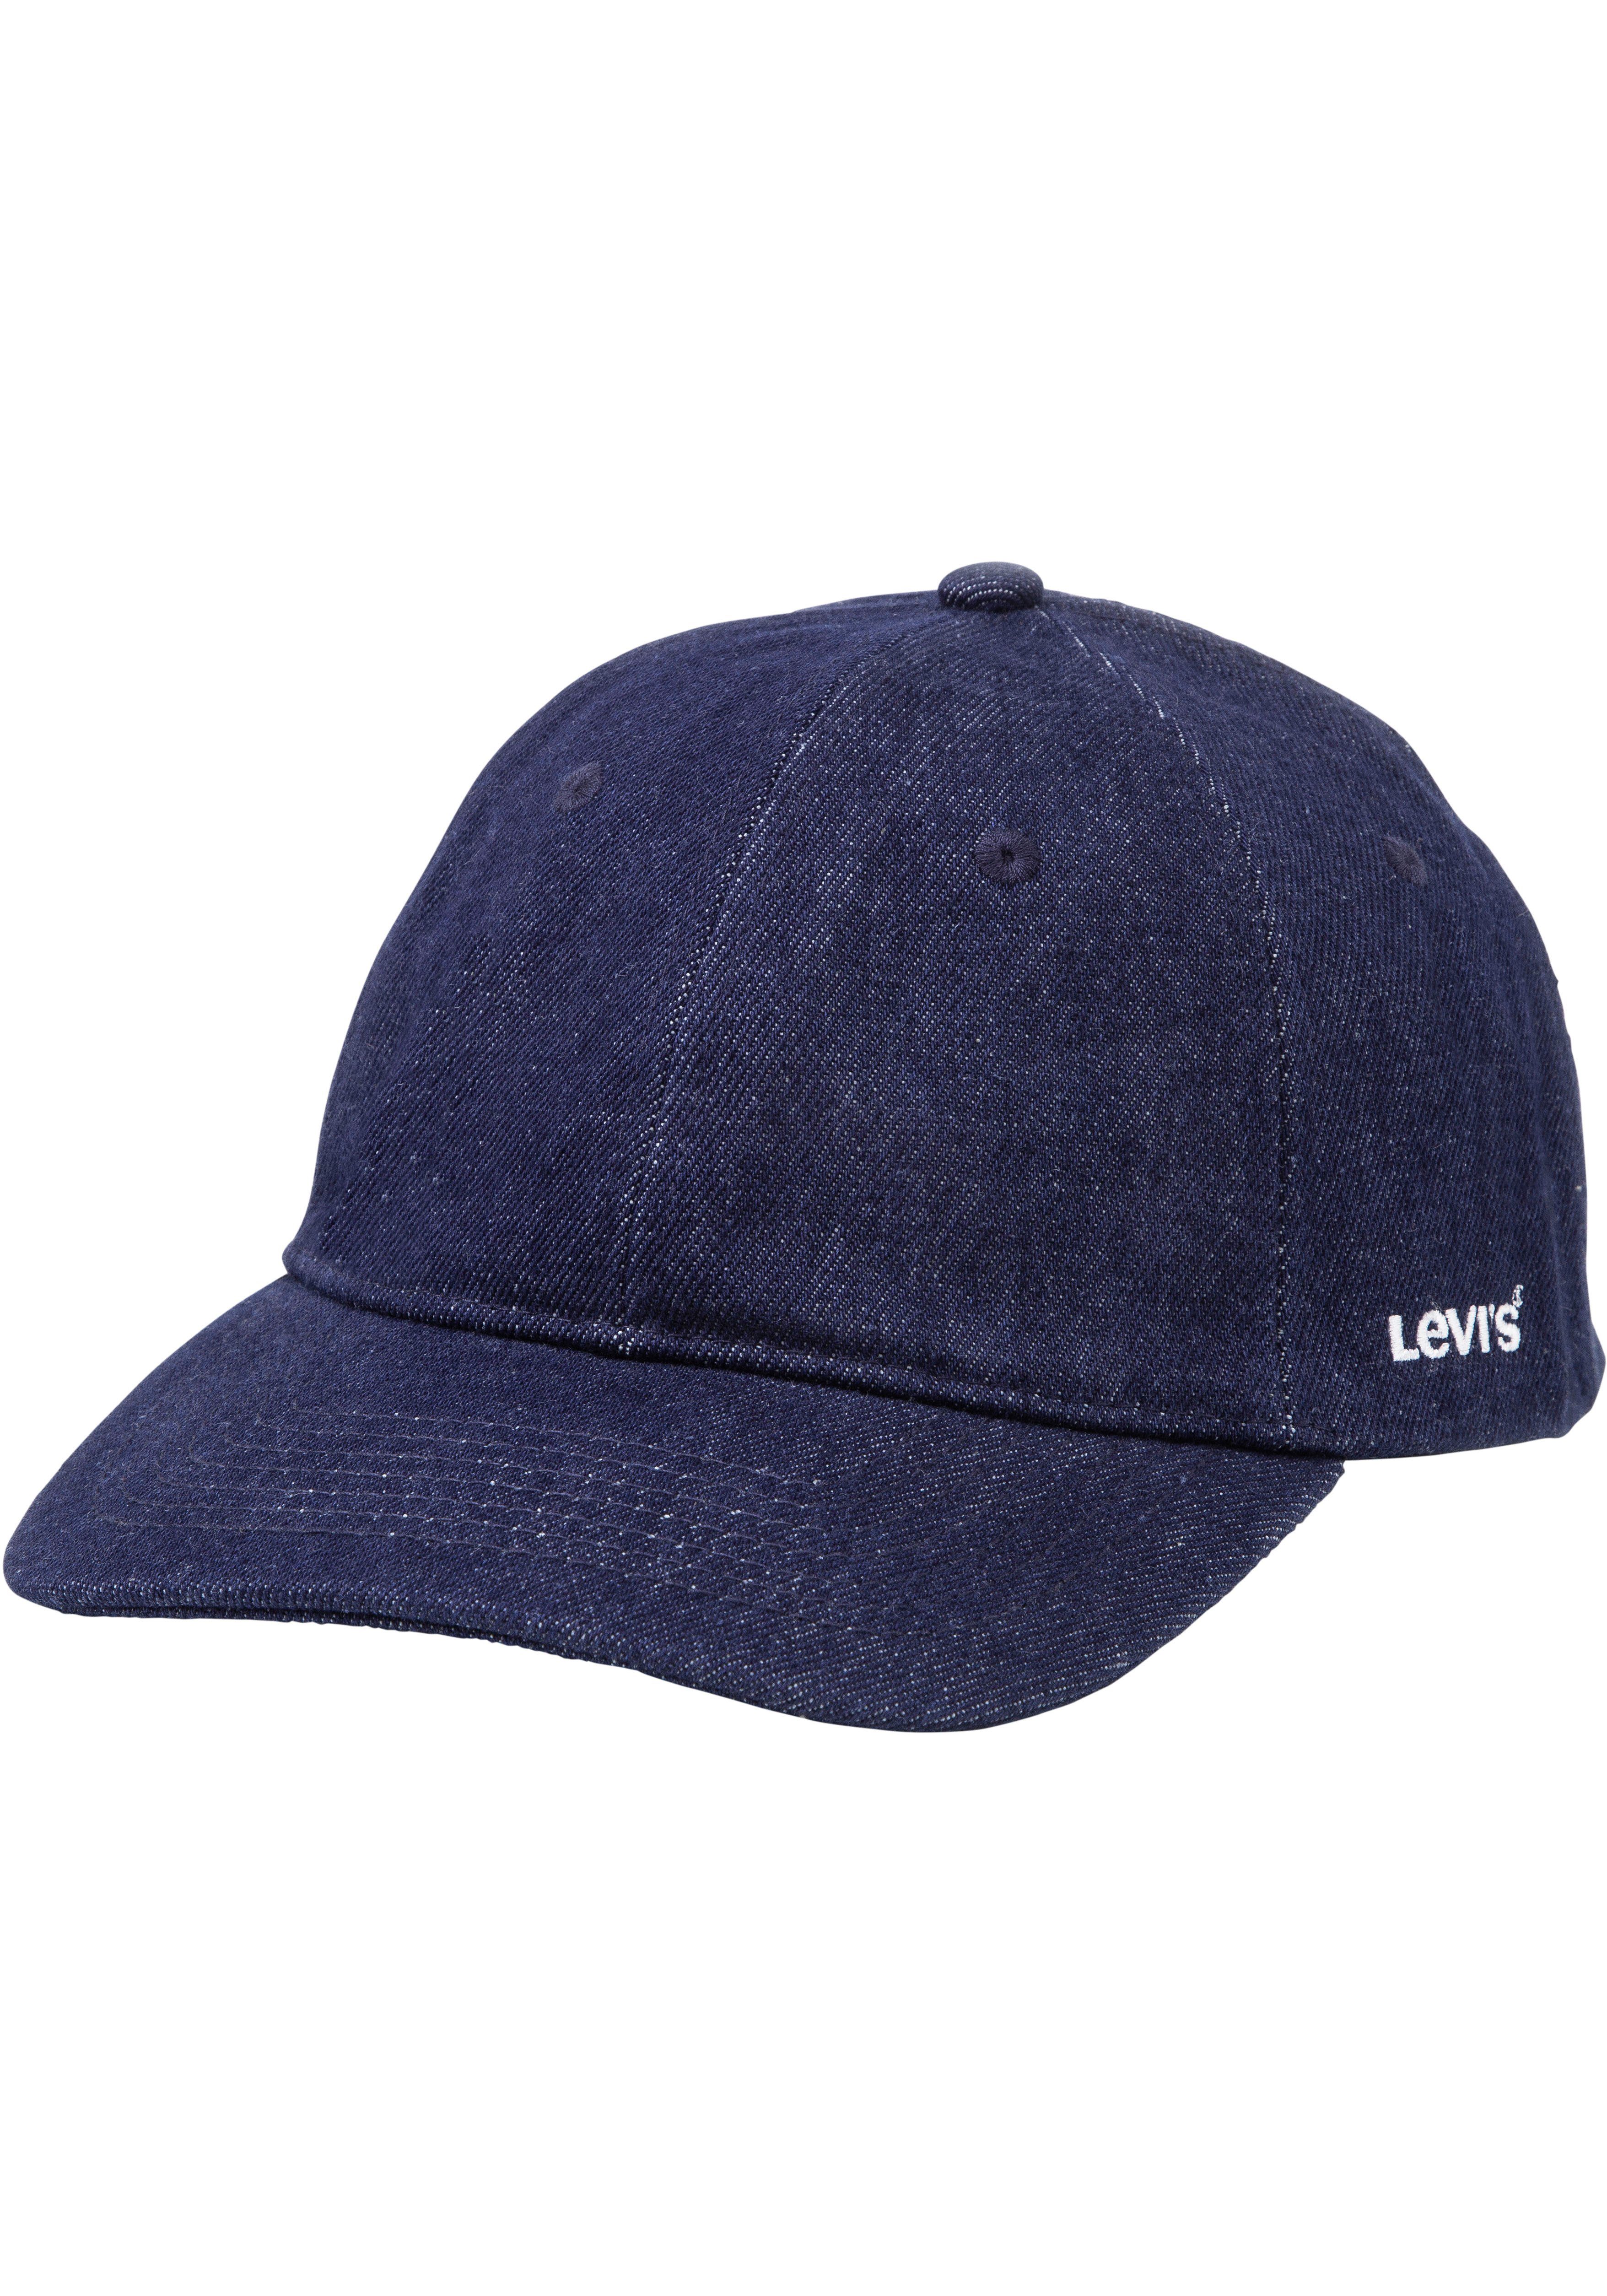 ESSENTIAL Cap blue Levi's® Baseball dark